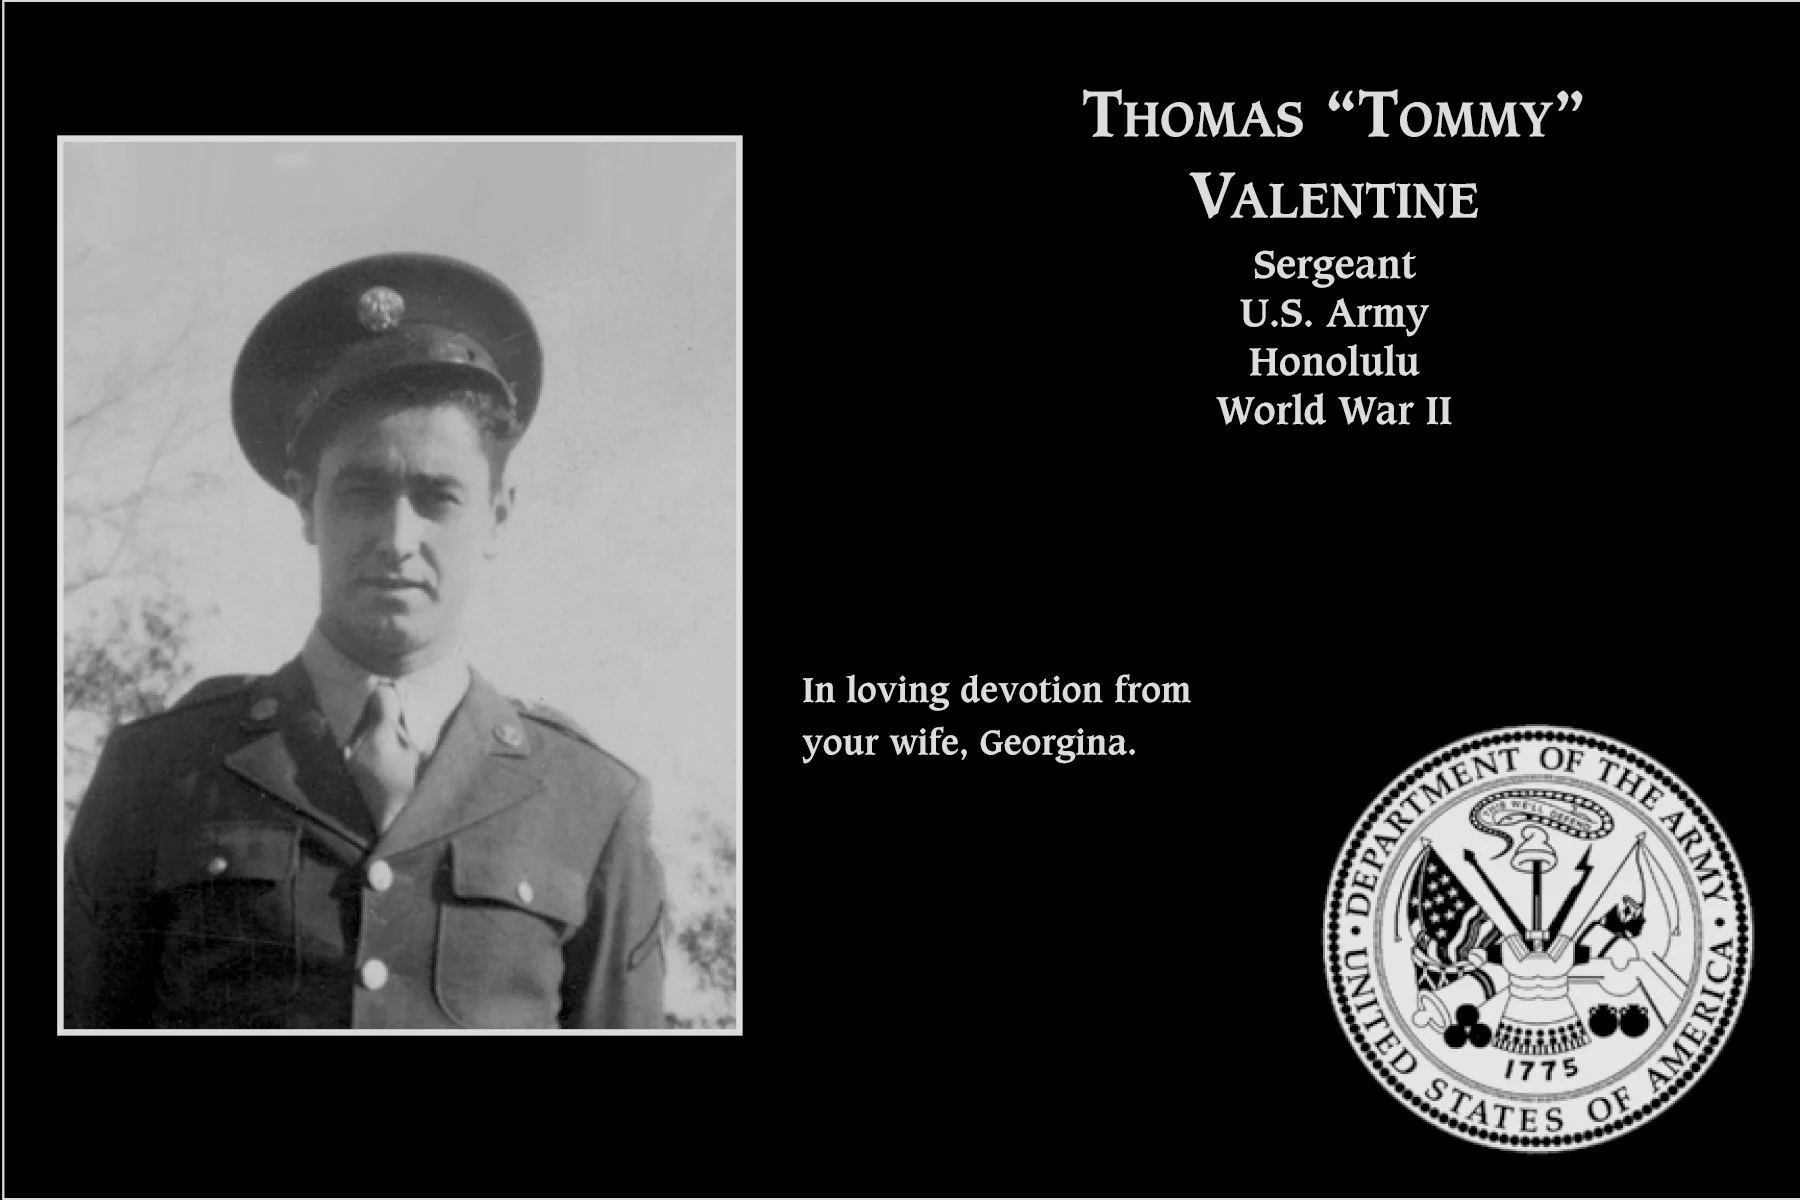 Thomas Valentine